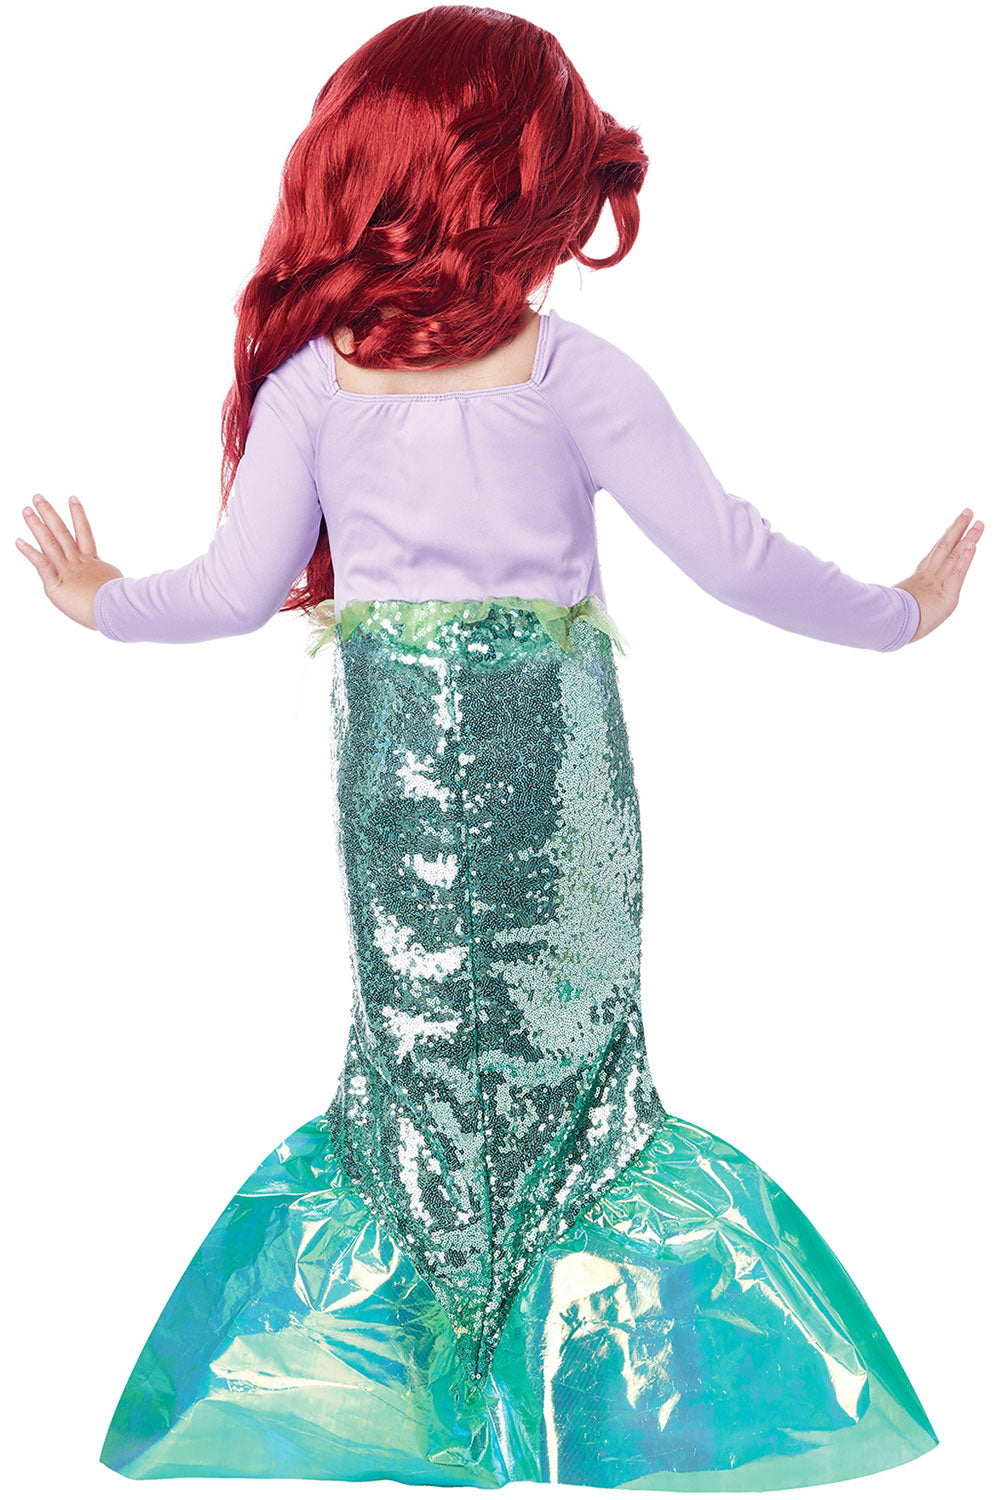 Marvelous Mermaid / Toddler California Costume 2021-185